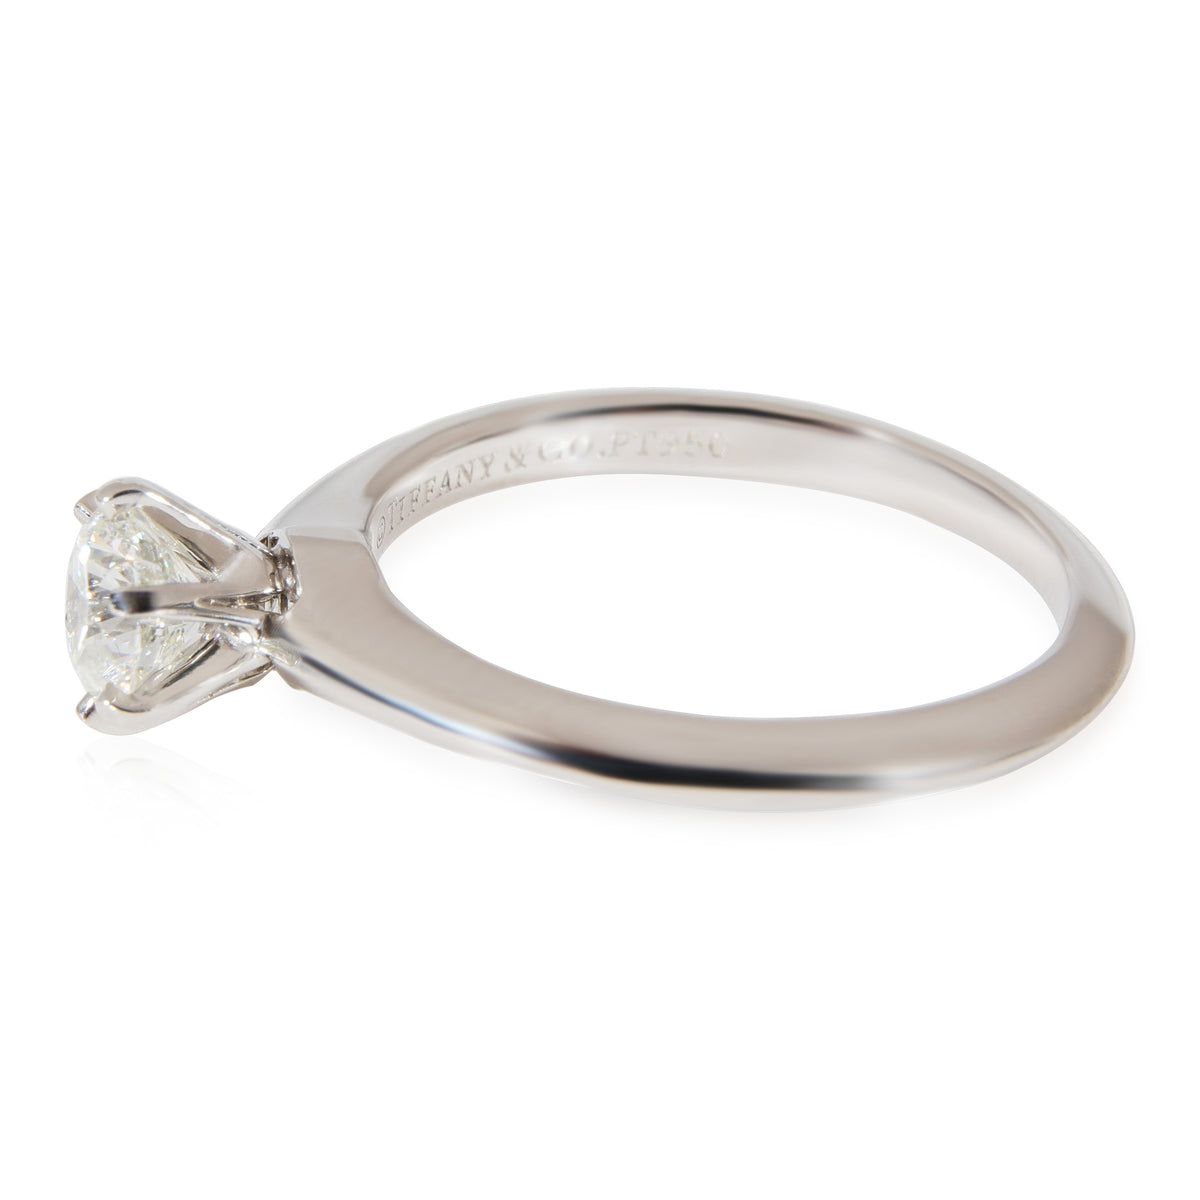 Tiffany & Co. Diamond Engagement Ring in Platinum I VVS1 0.49 CTW